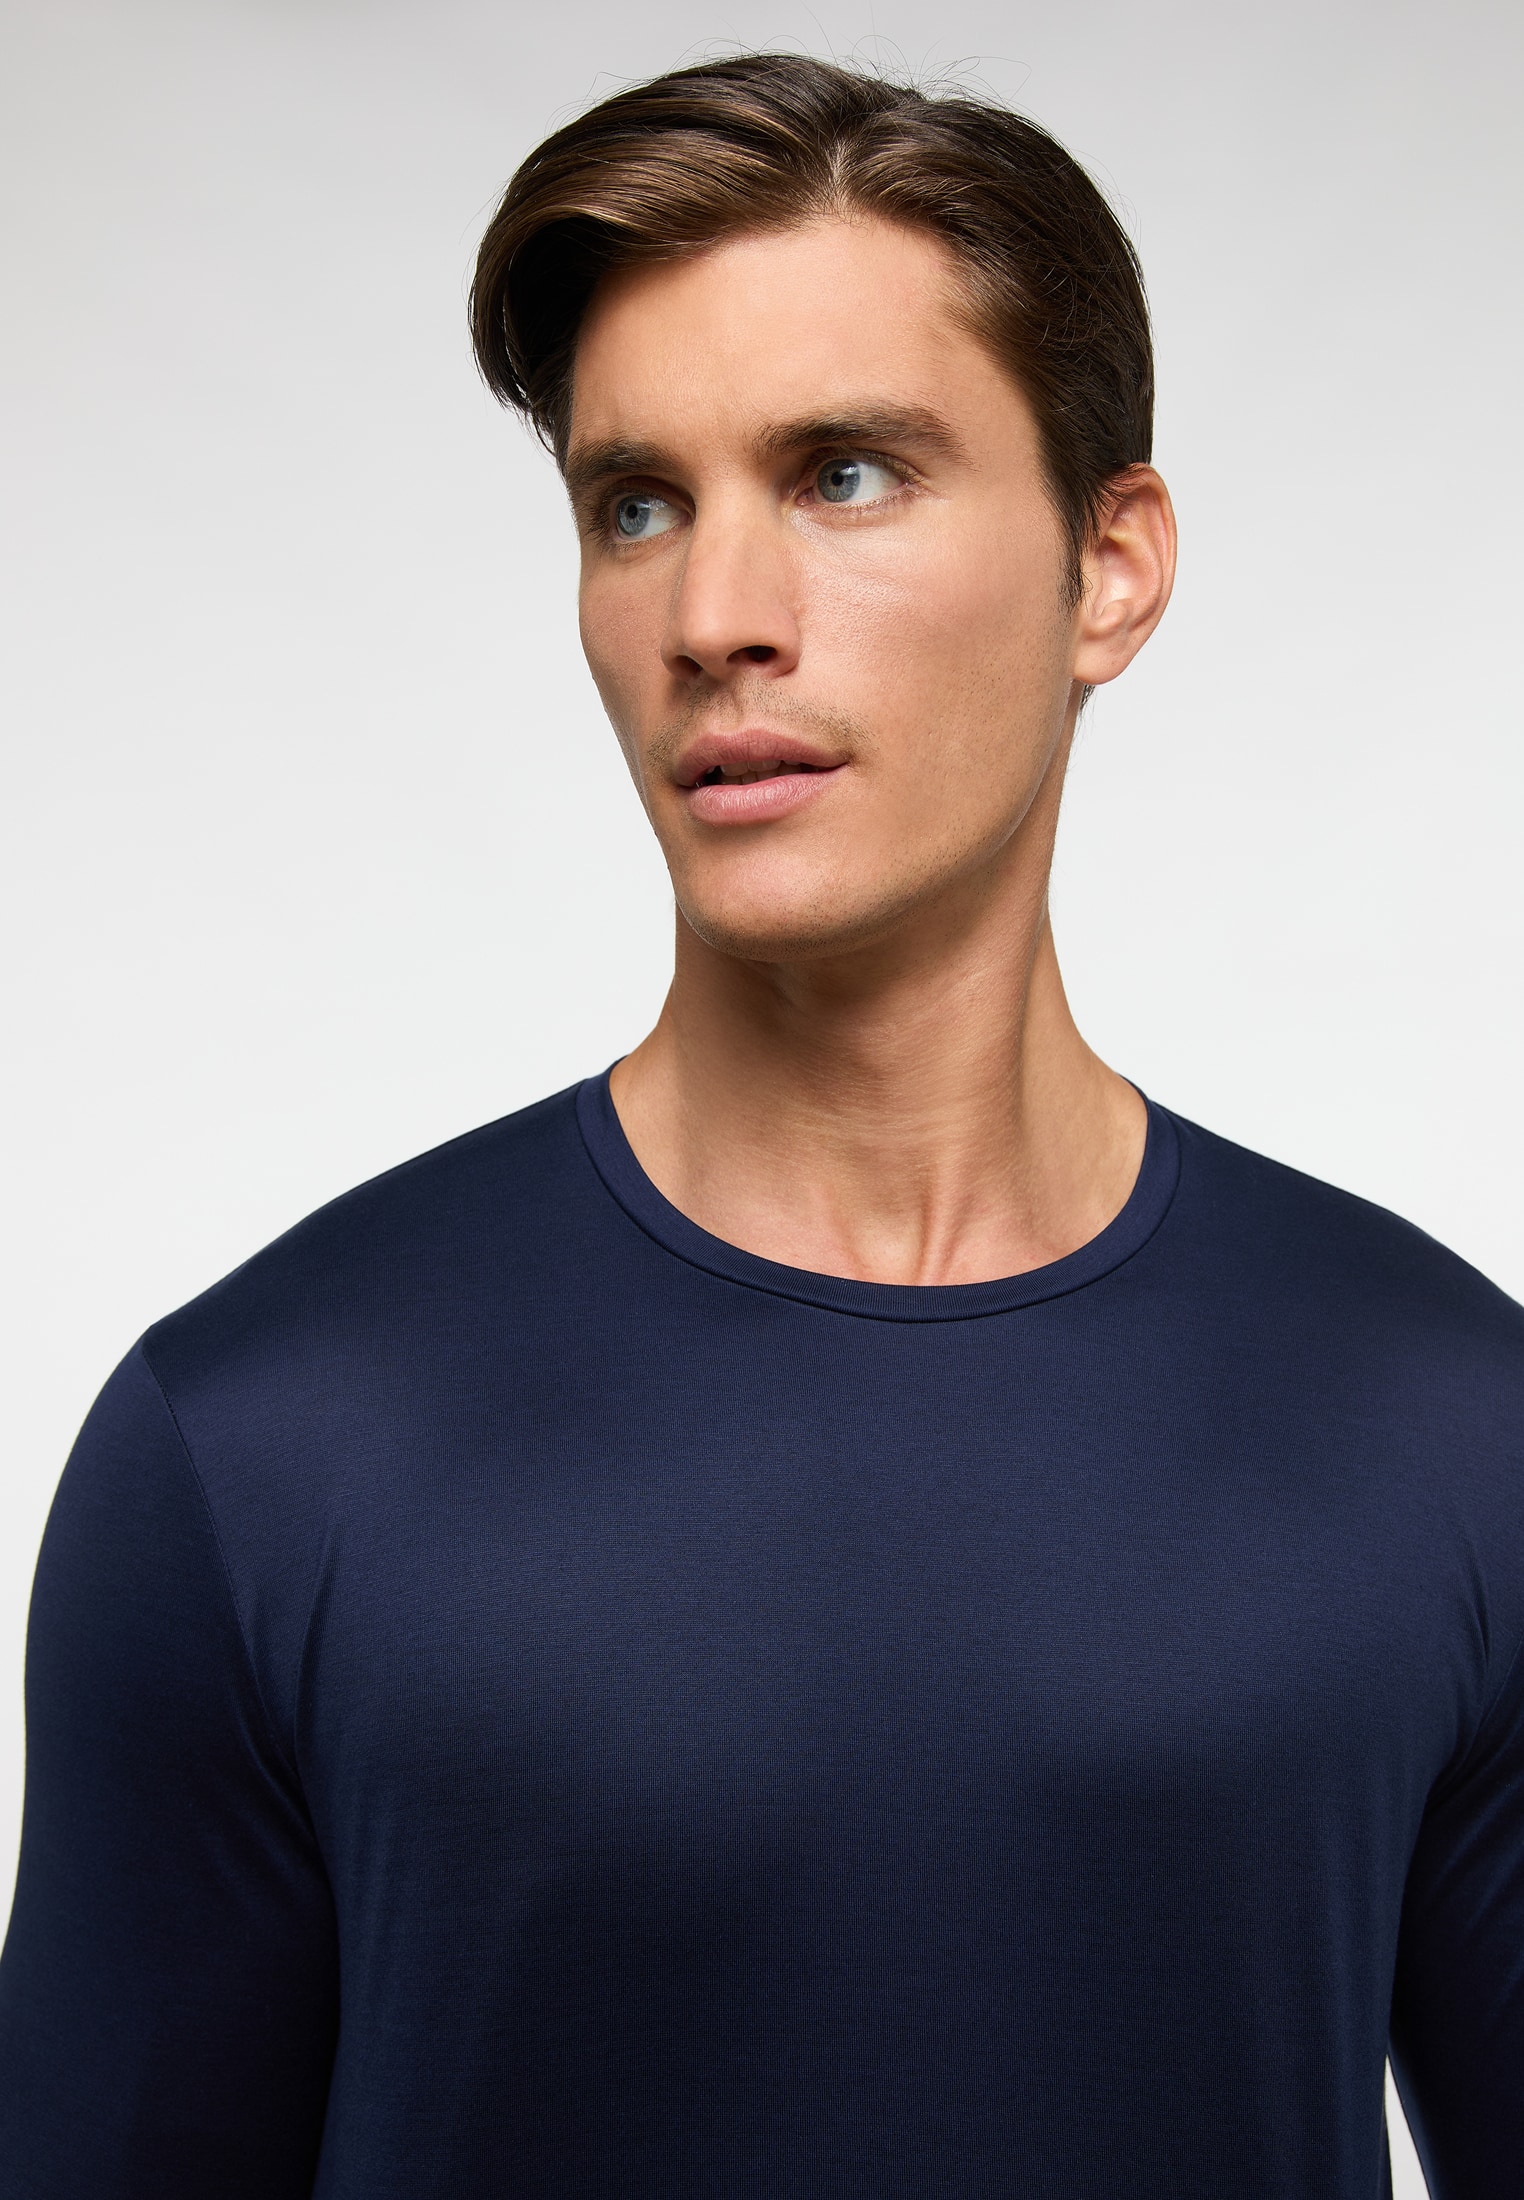 Shirt in dark blue plain